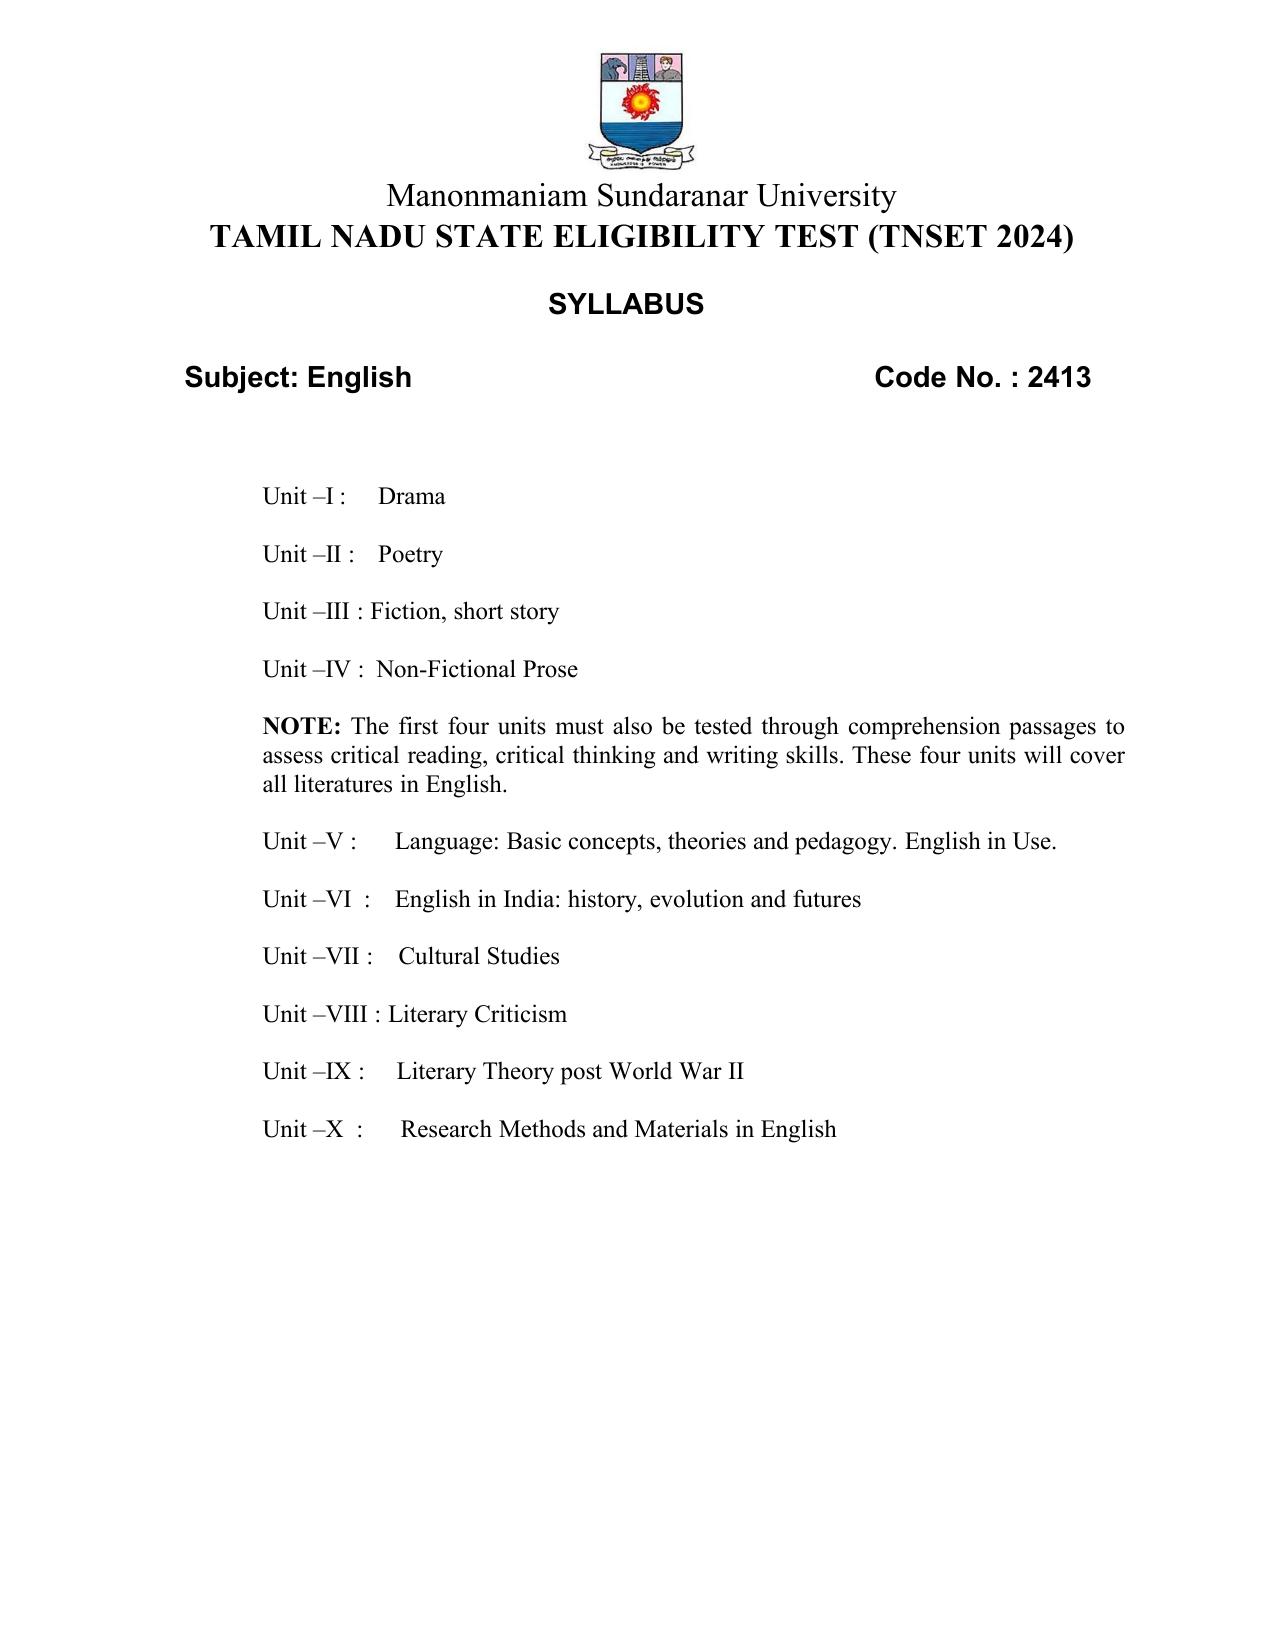 TNSET Syllabus - English - Page 1